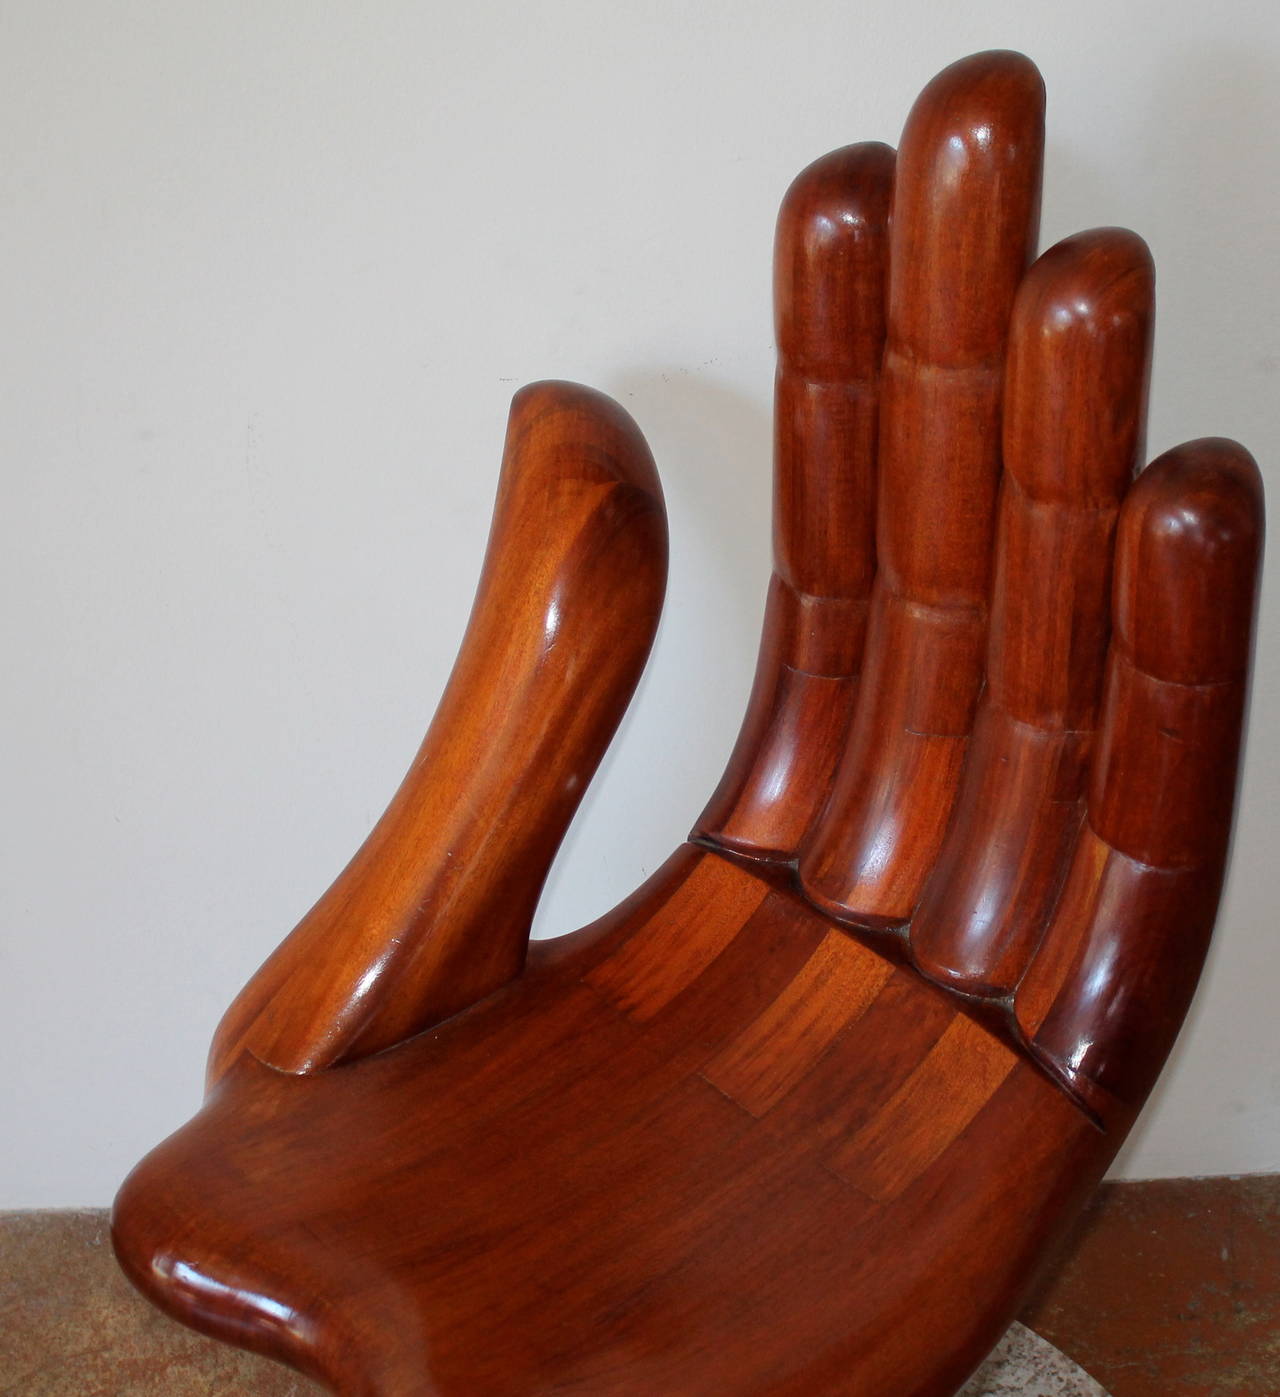 Carved Pedro Friedeberg Mahogany Hand Chair or Silla-Mano, Mexico City, 1970